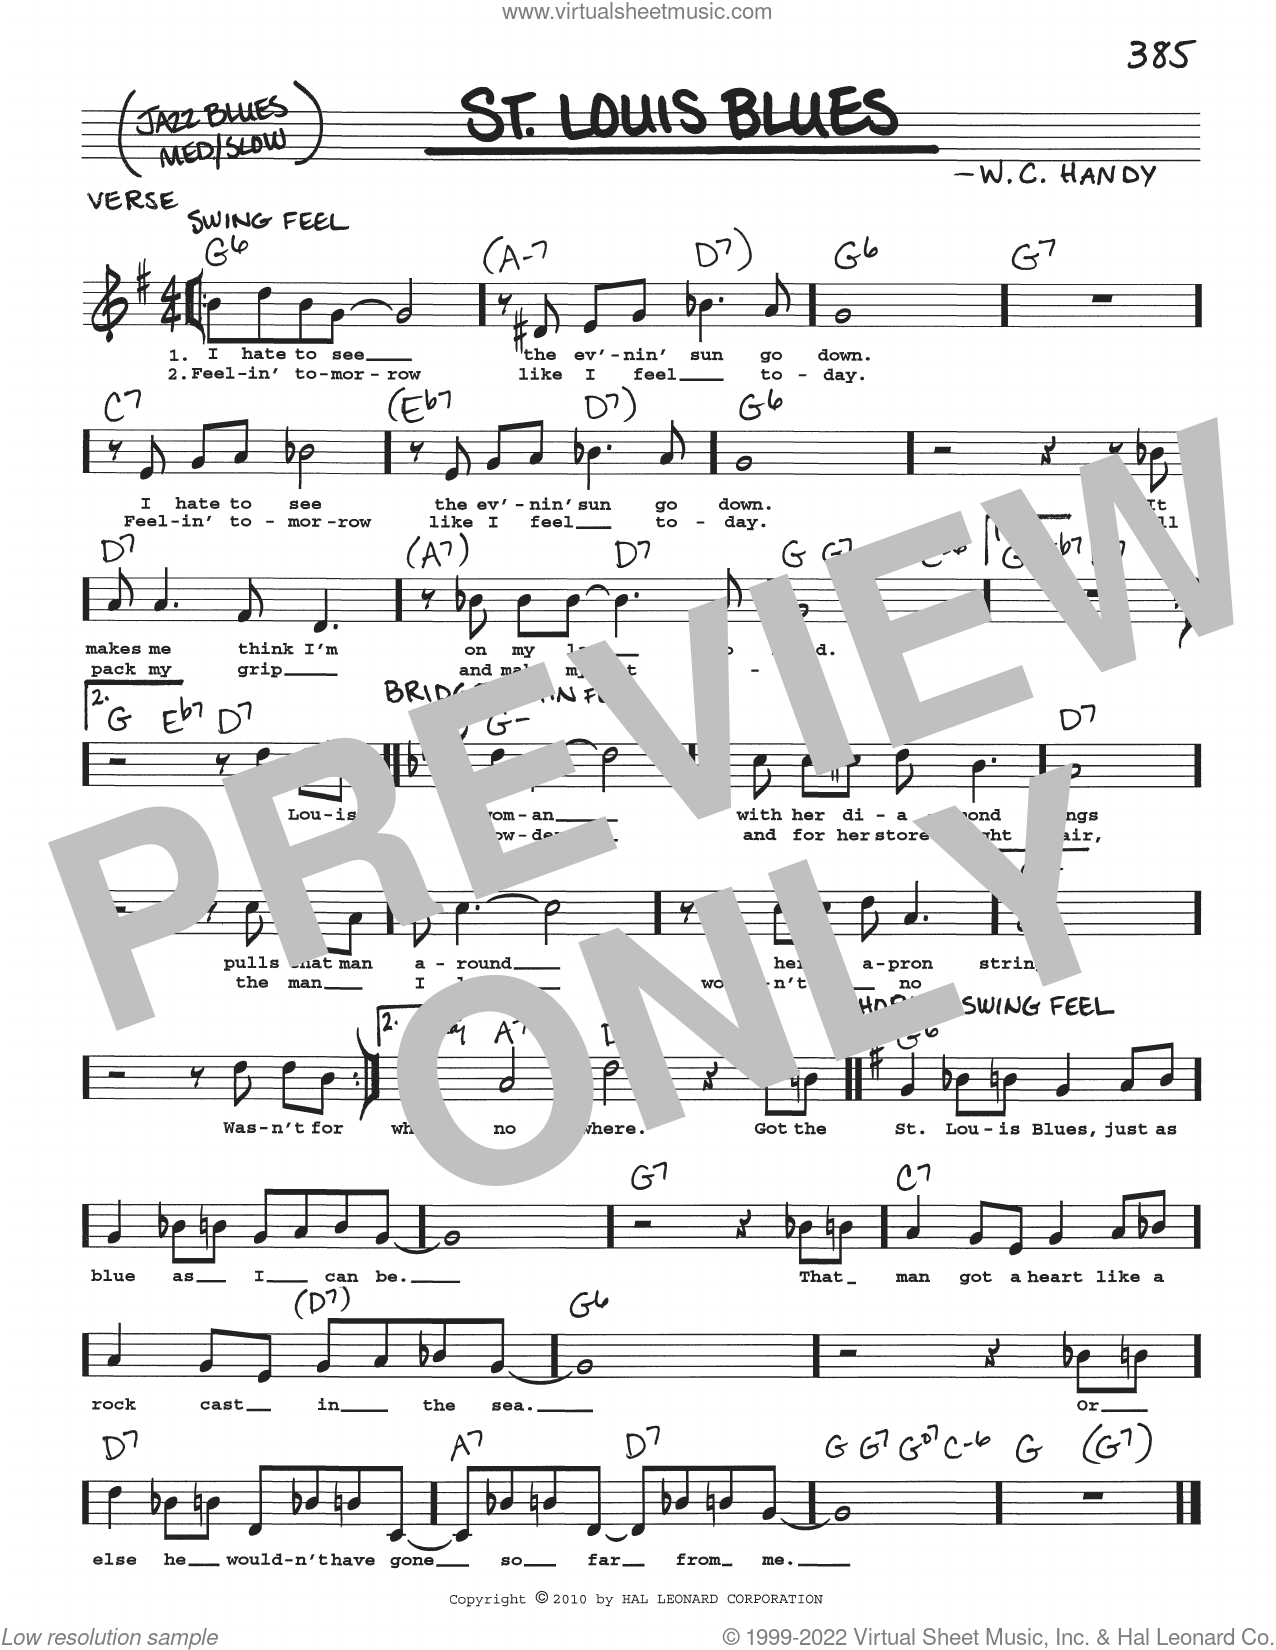 Print and Download St. Louis Blues Sheet Music; Sheet Music